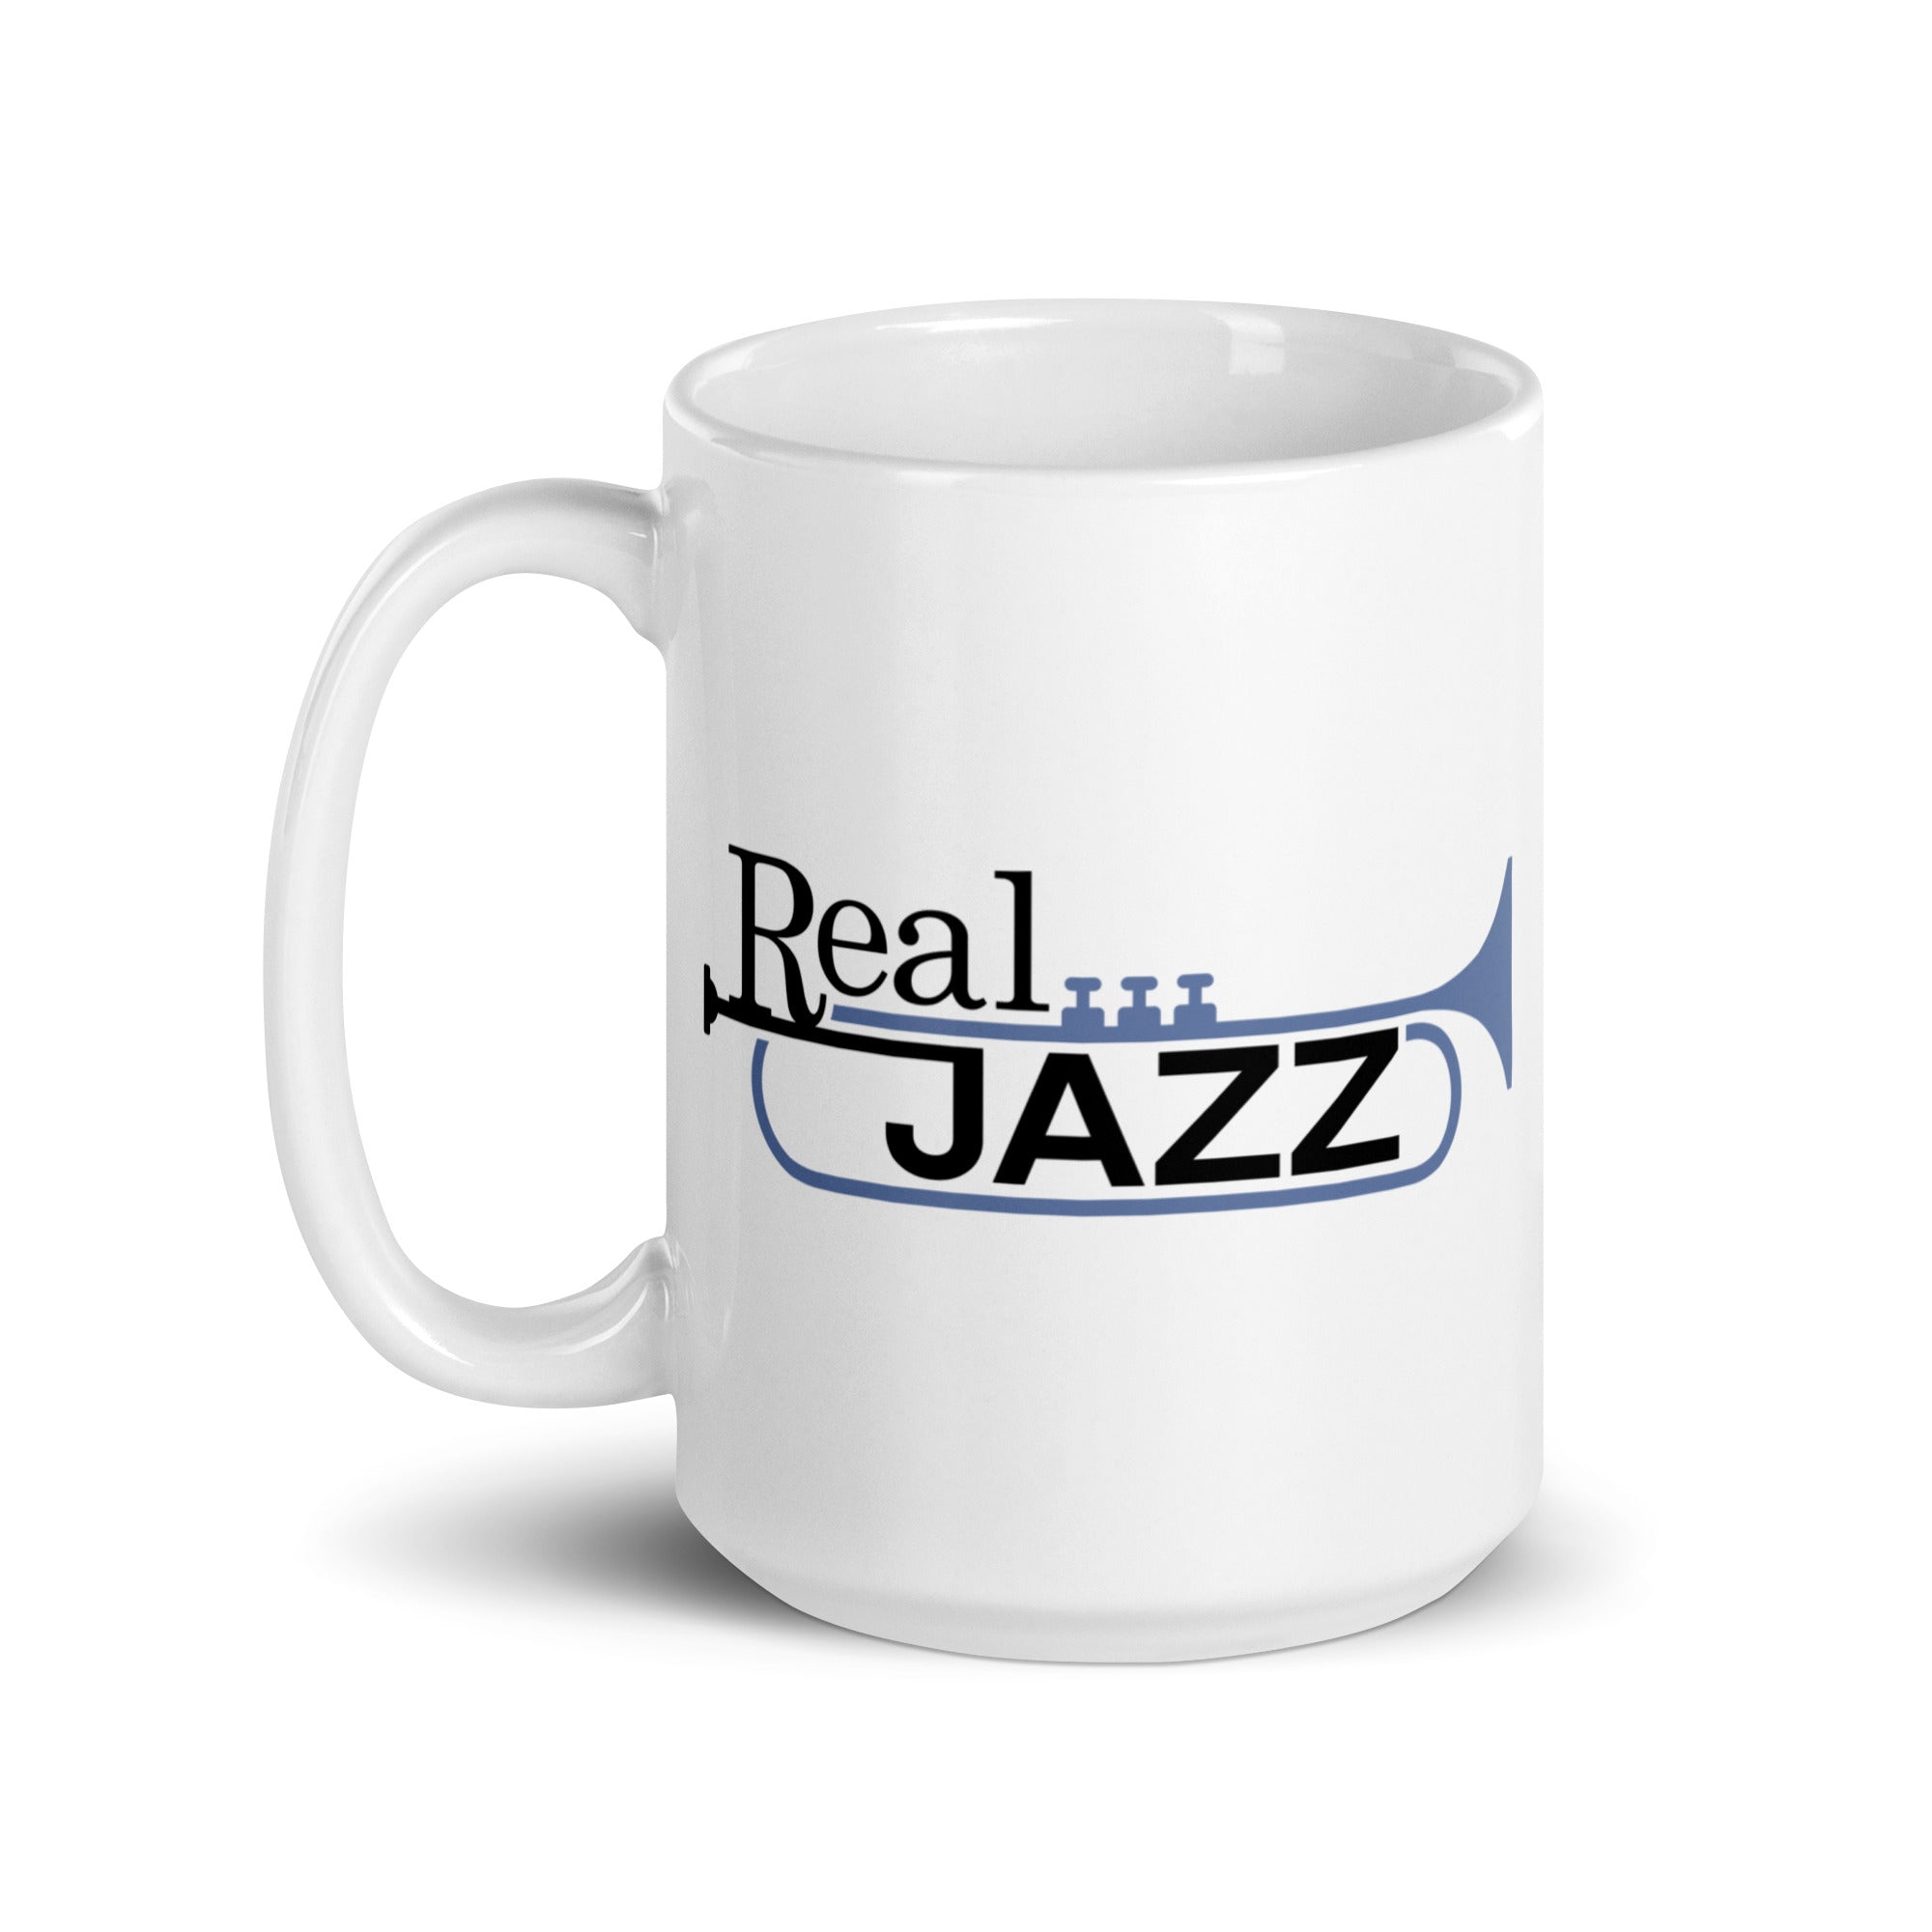 Real Jazz: Mug